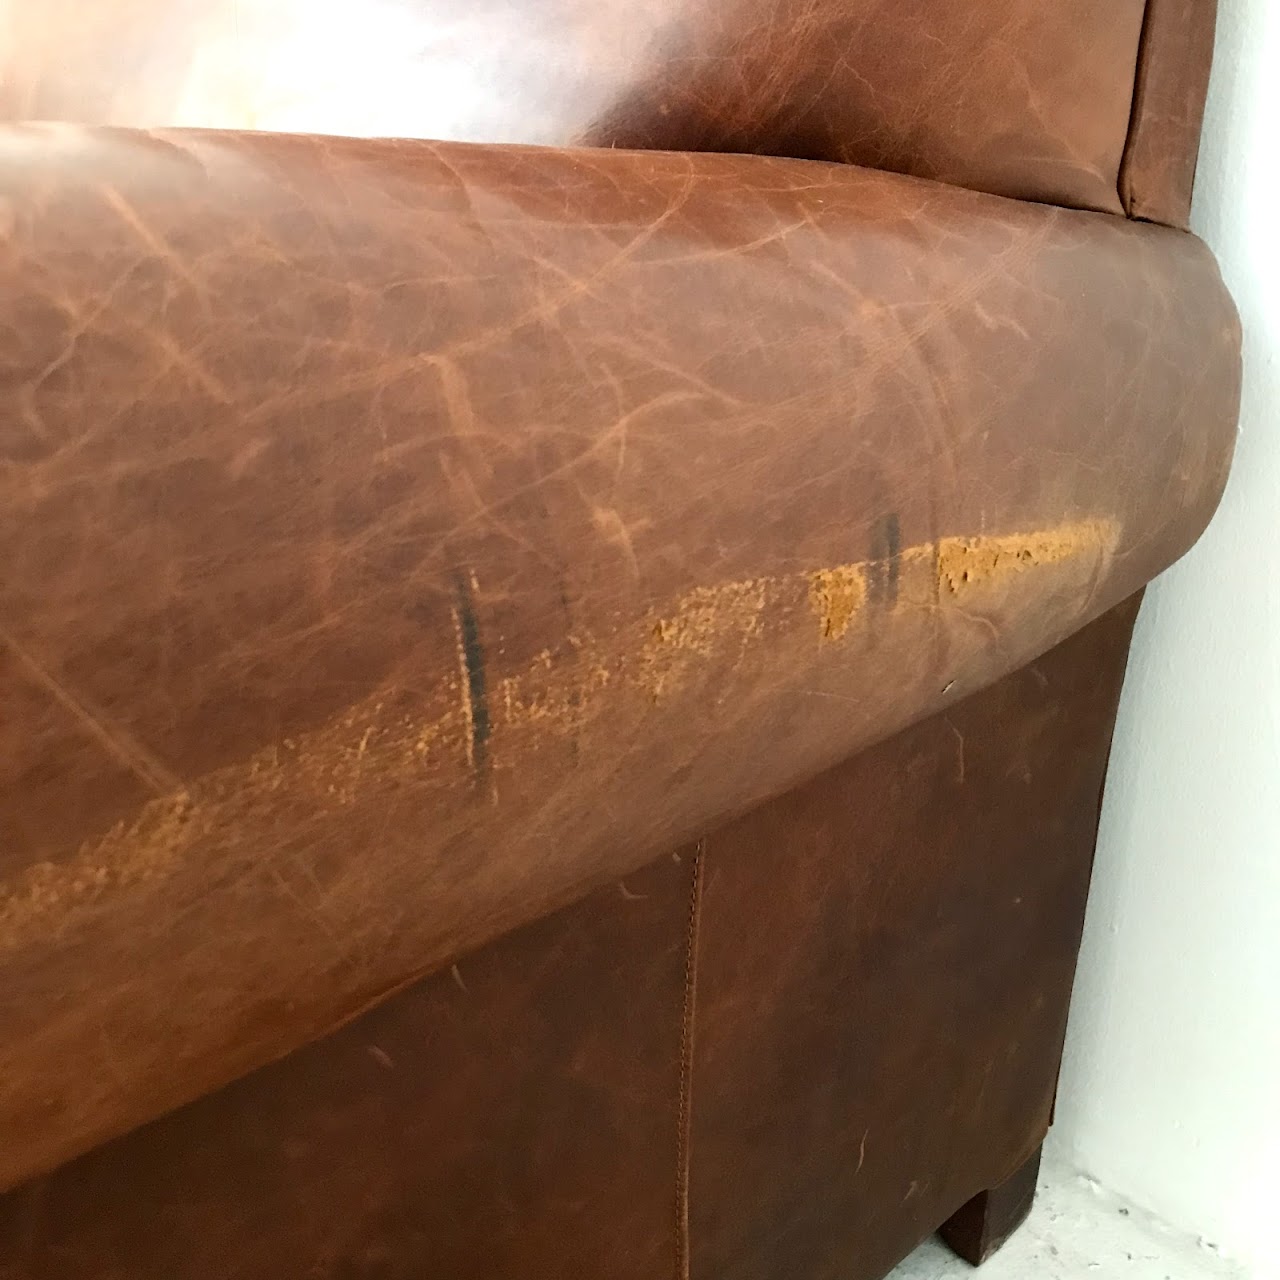 Crate & Barrel Distressed Leather Sleeper Sofa